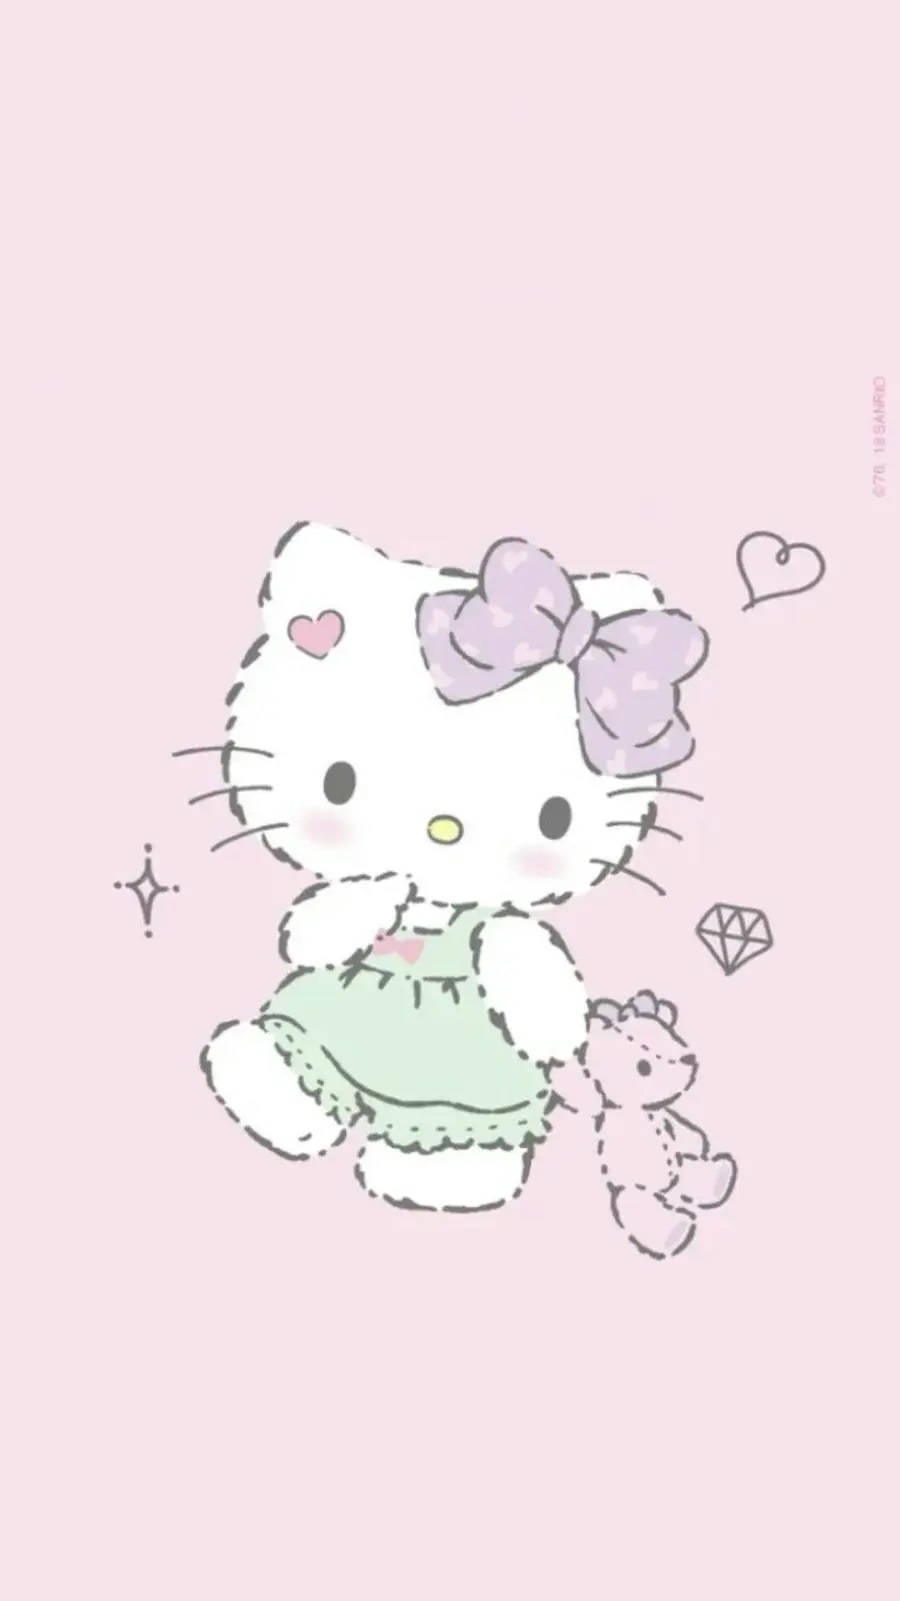 Fuzzy Cartoon Hello Kitty Pfp Picture